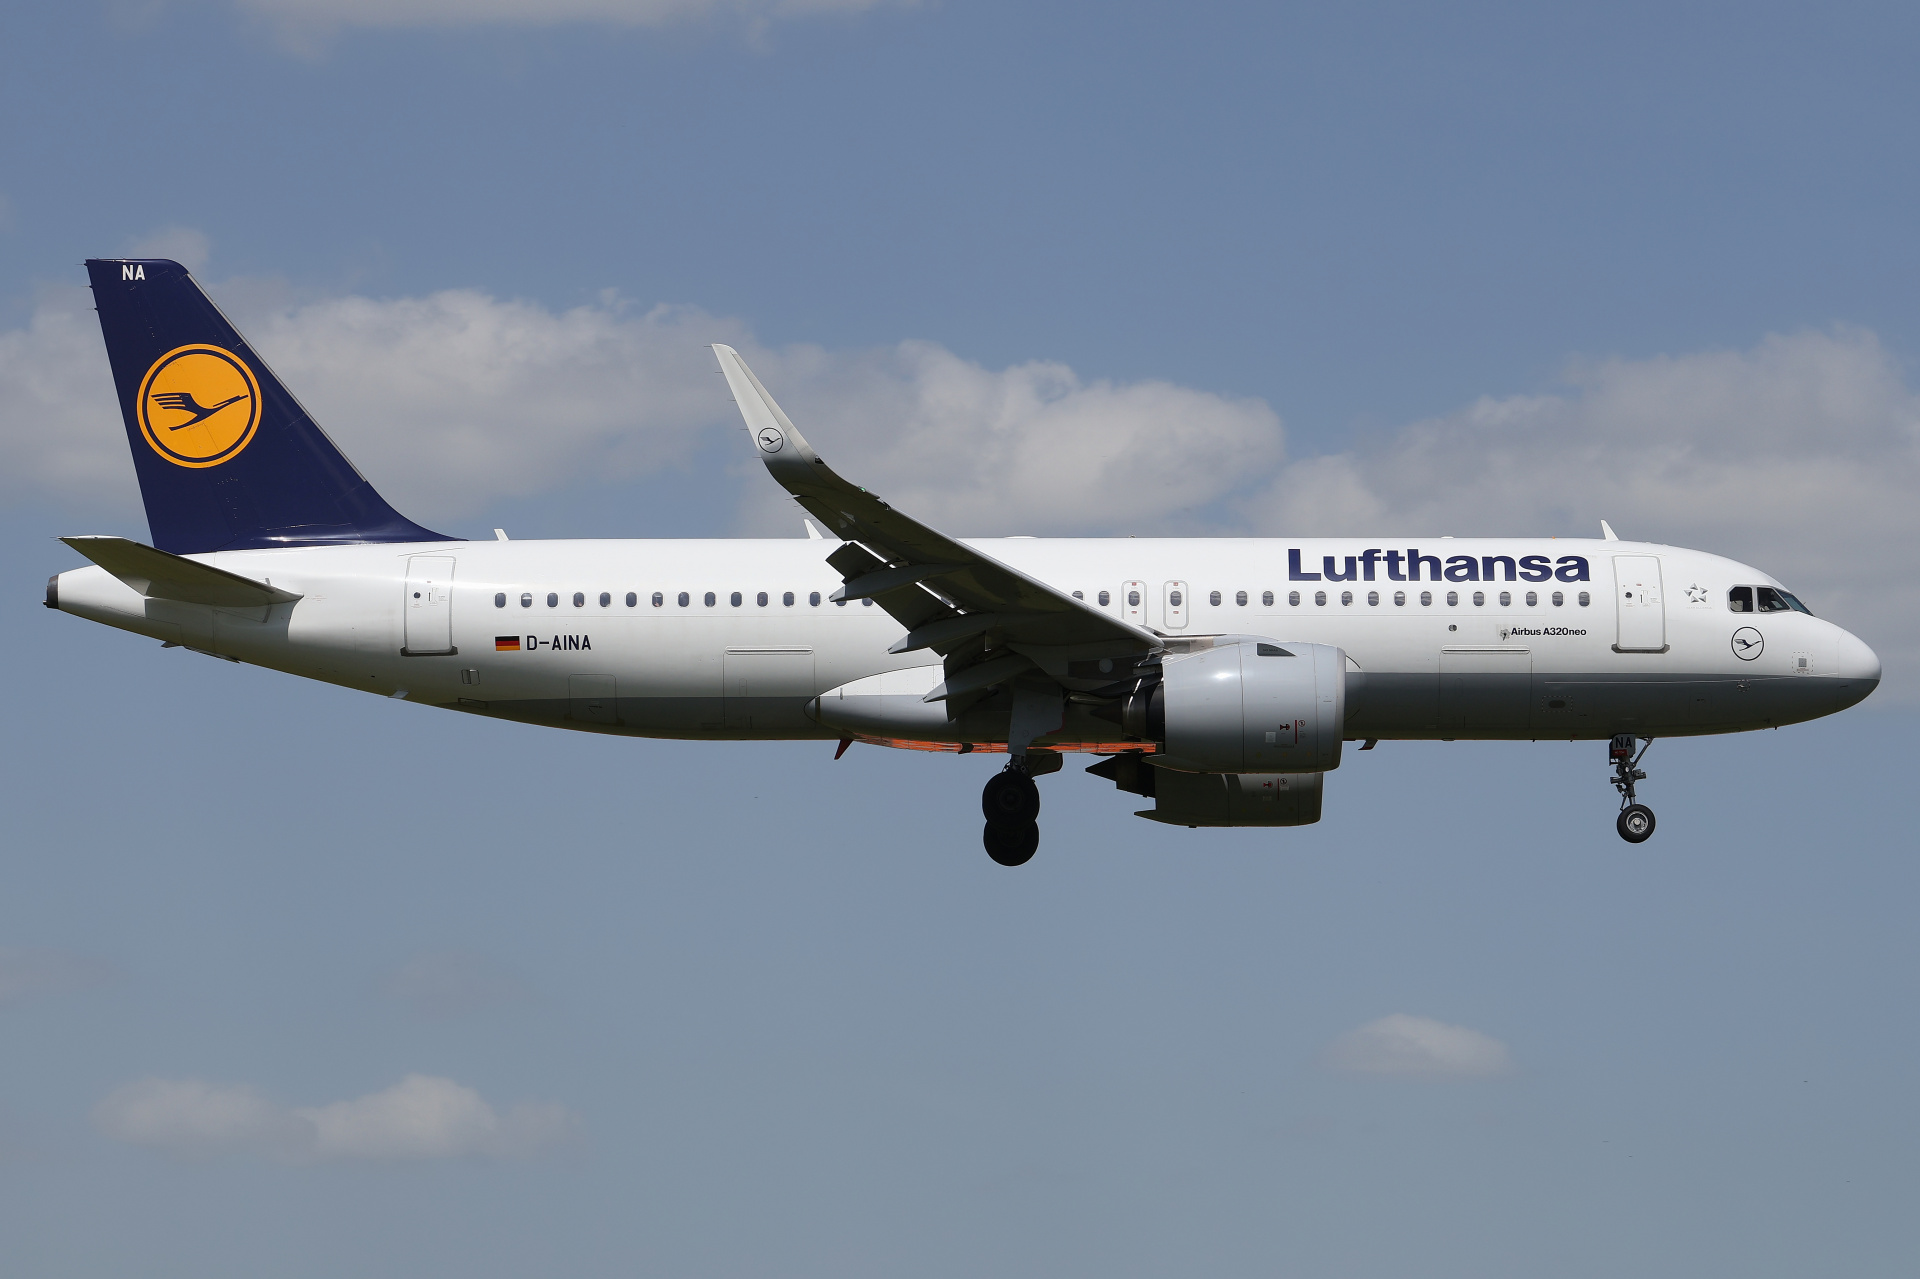 D-AINA (Aircraft » EPWA Spotting » Airbus A320neo » Lufthansa)